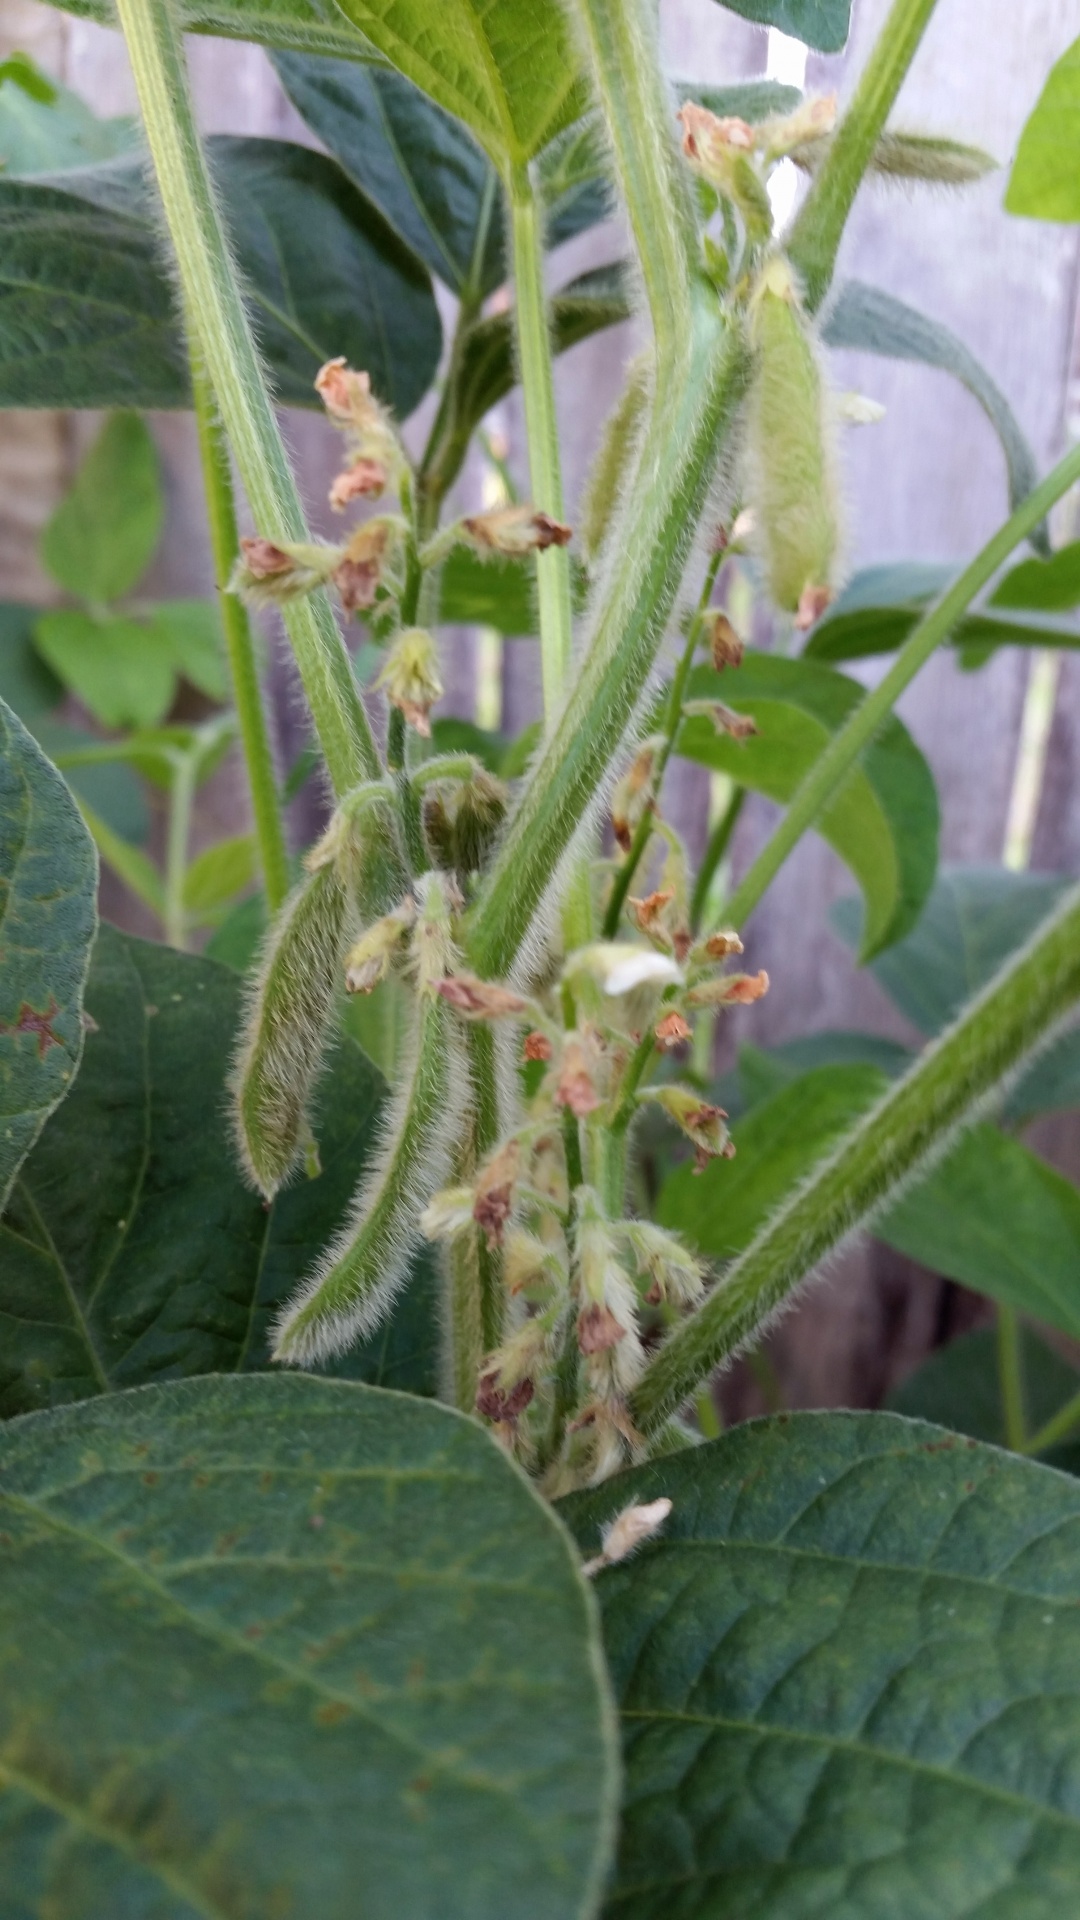 Soya Bean On The Plant